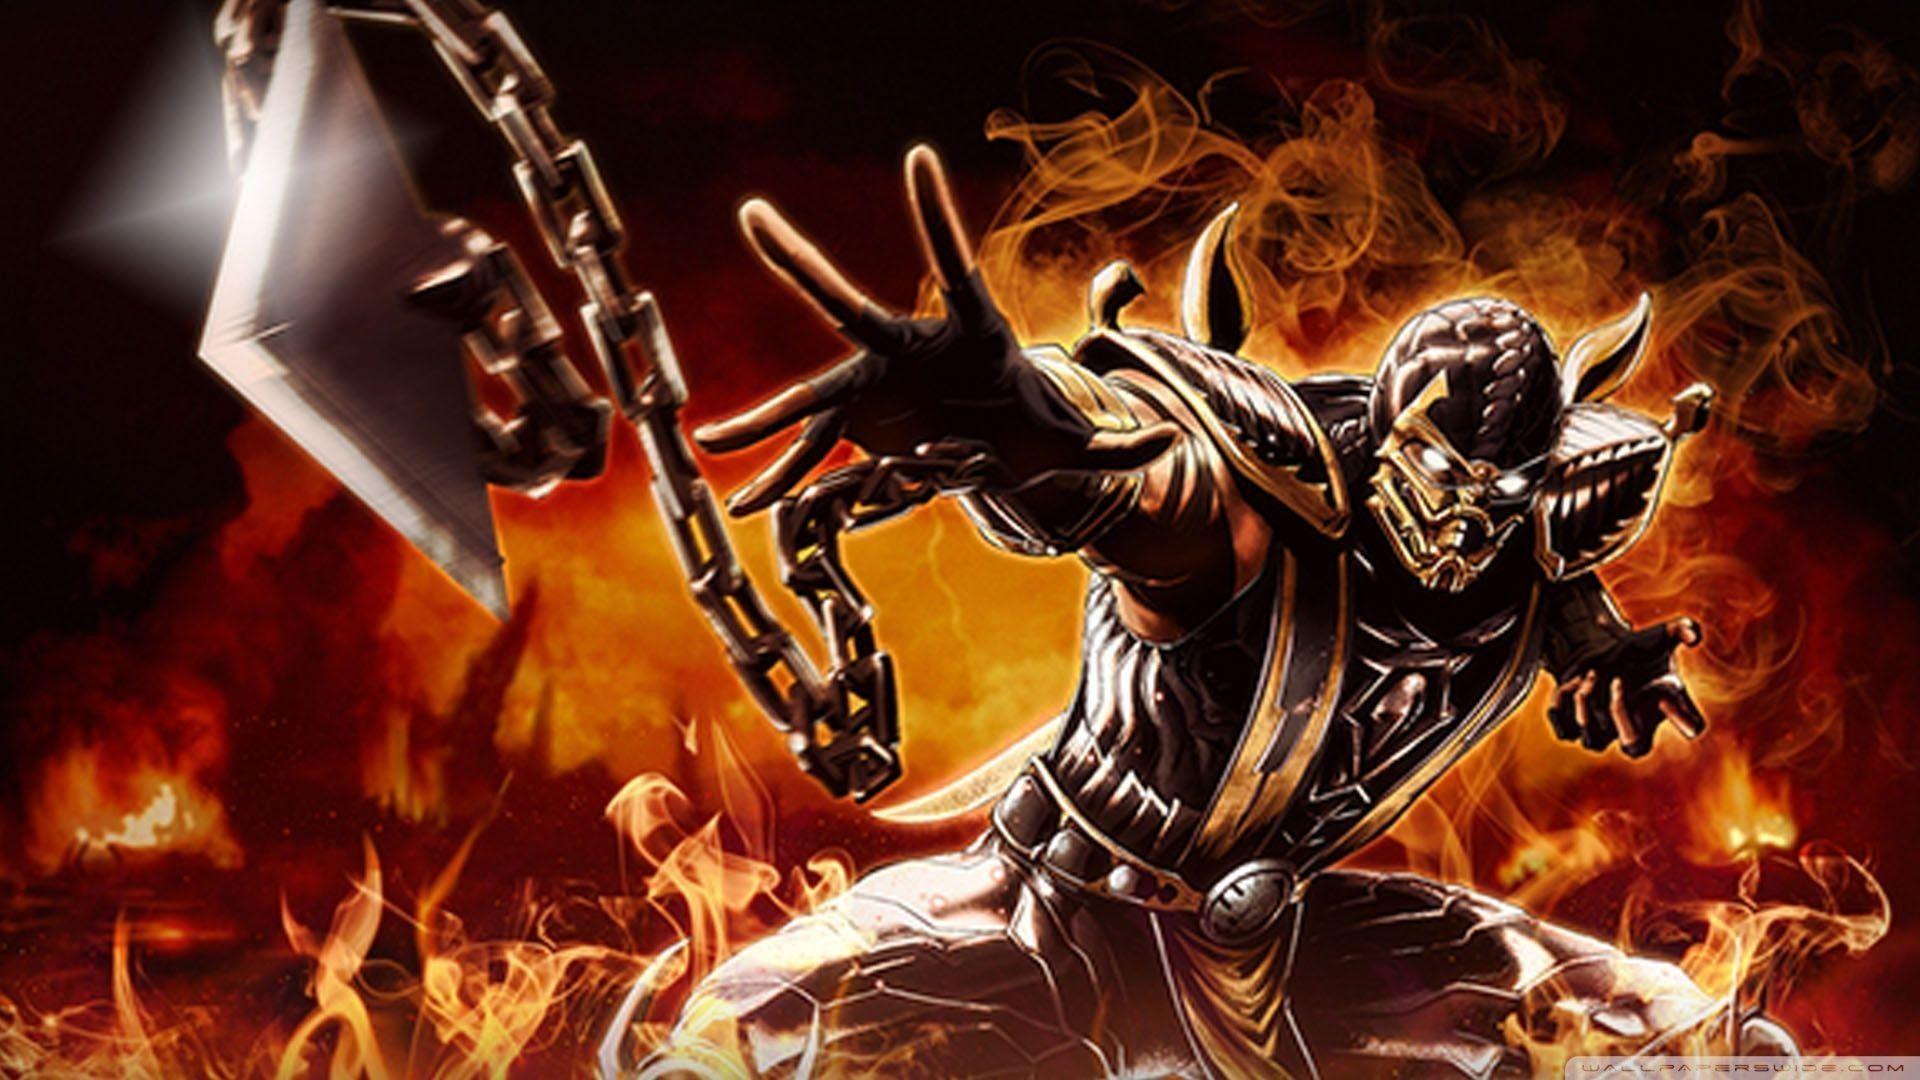 Mortal Kombat X Wallpaper background picture